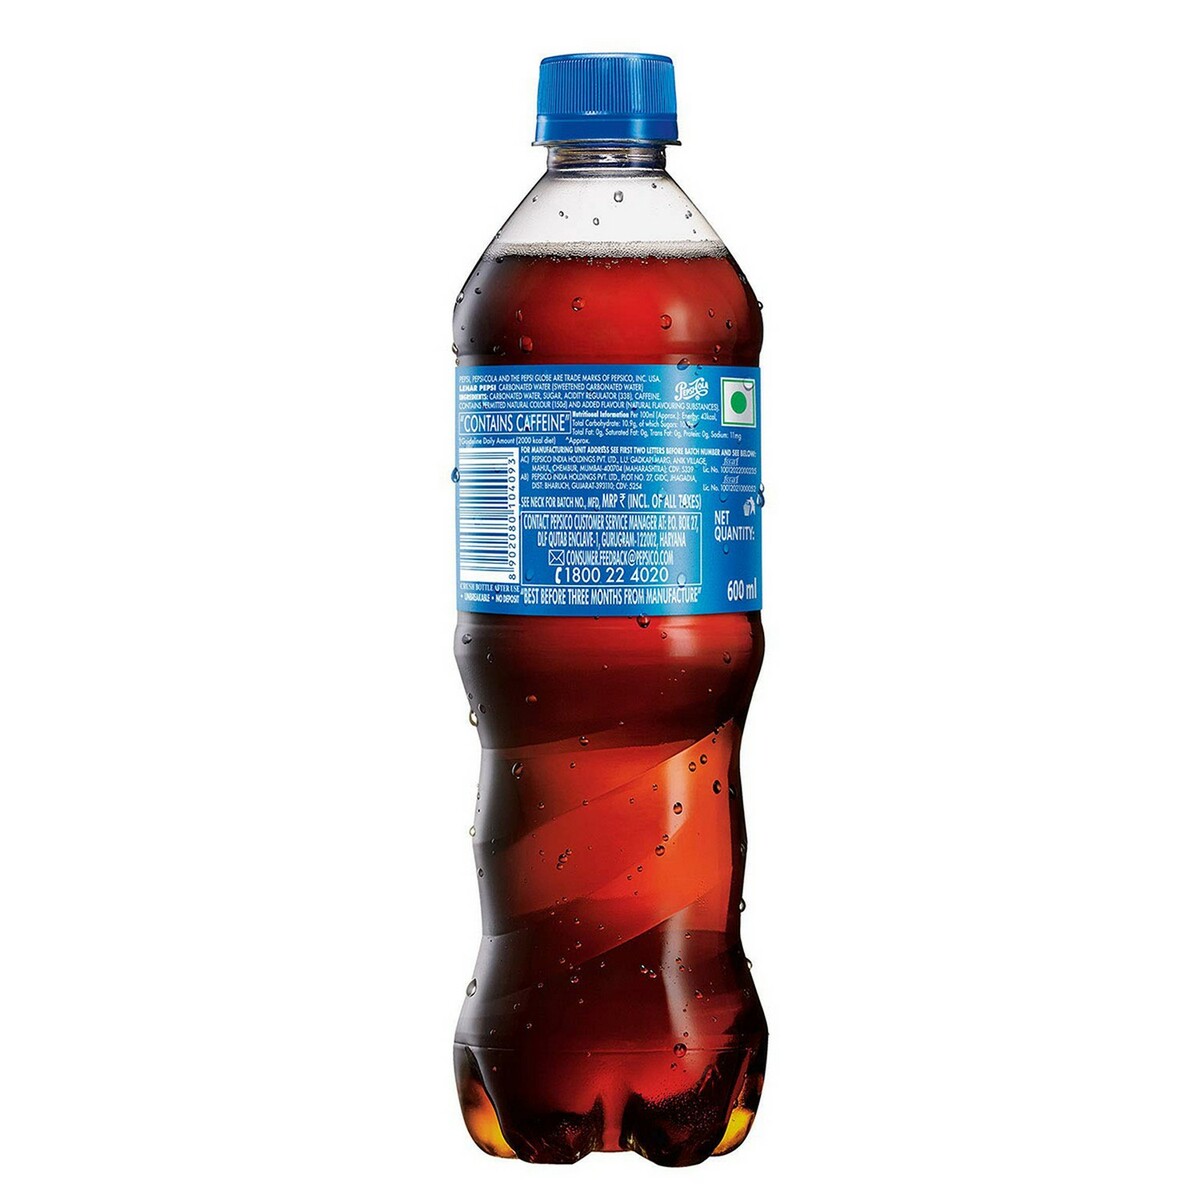 Pepsi Bottle 600ml